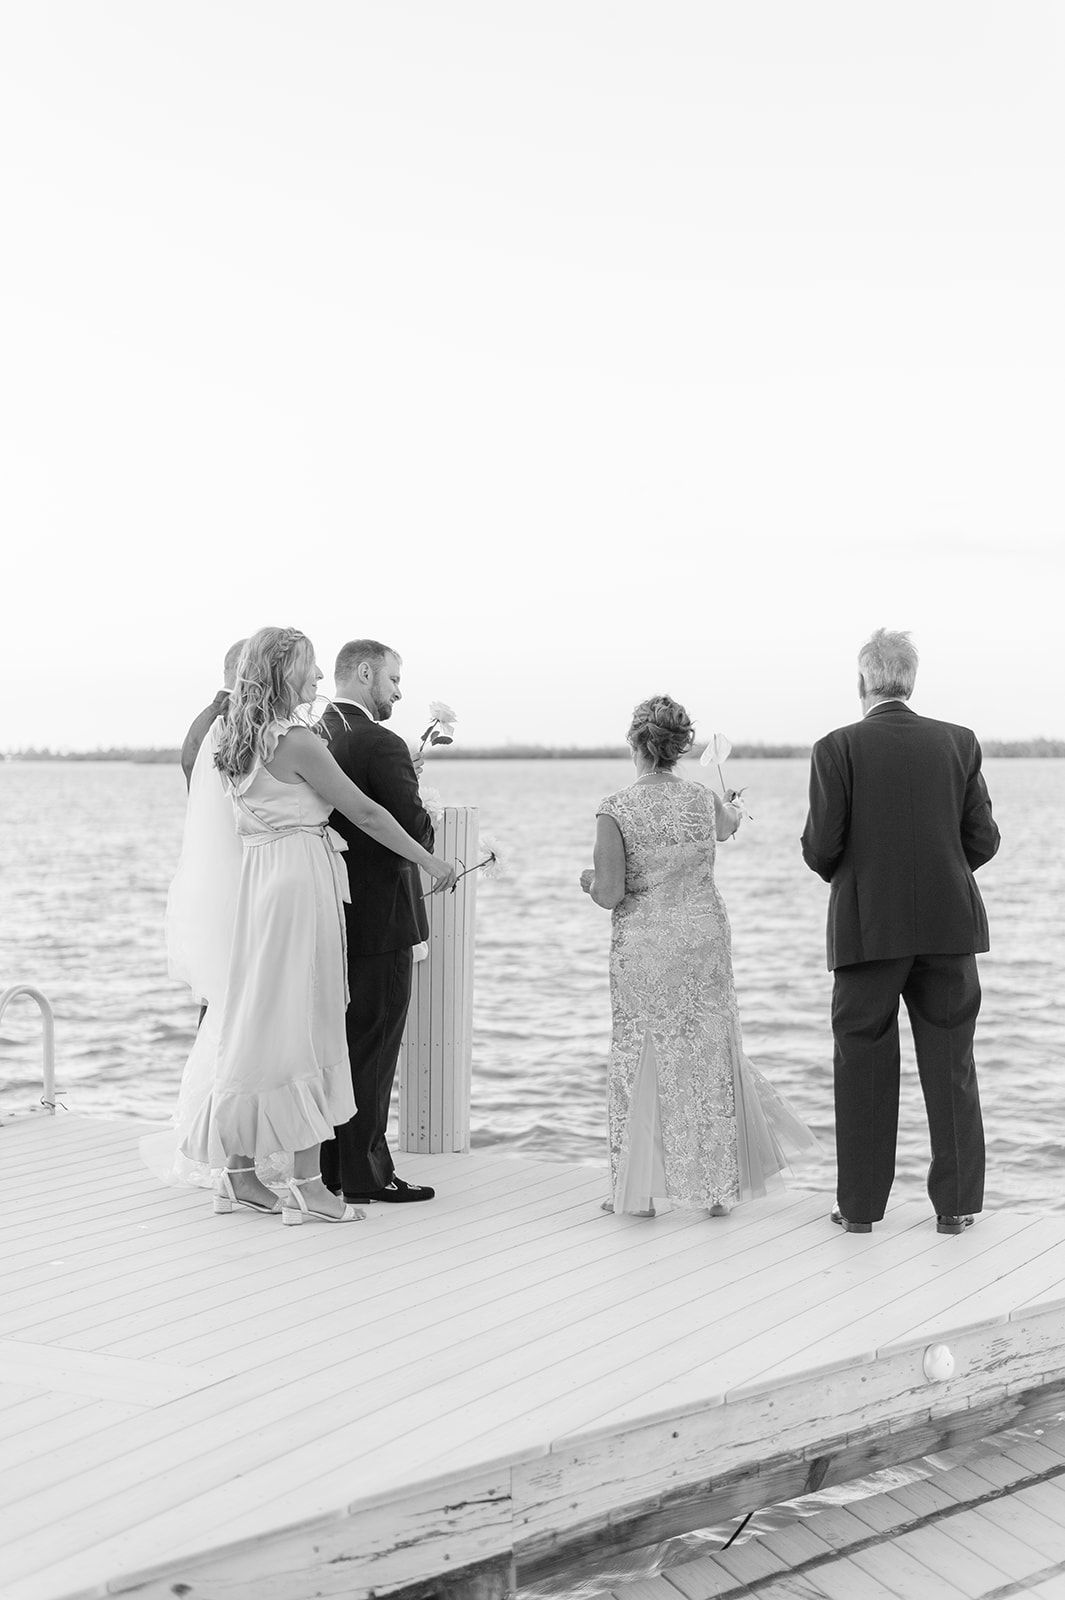 Marco Island Wedding Photography - A Beautiful and Timeless Keepsake
